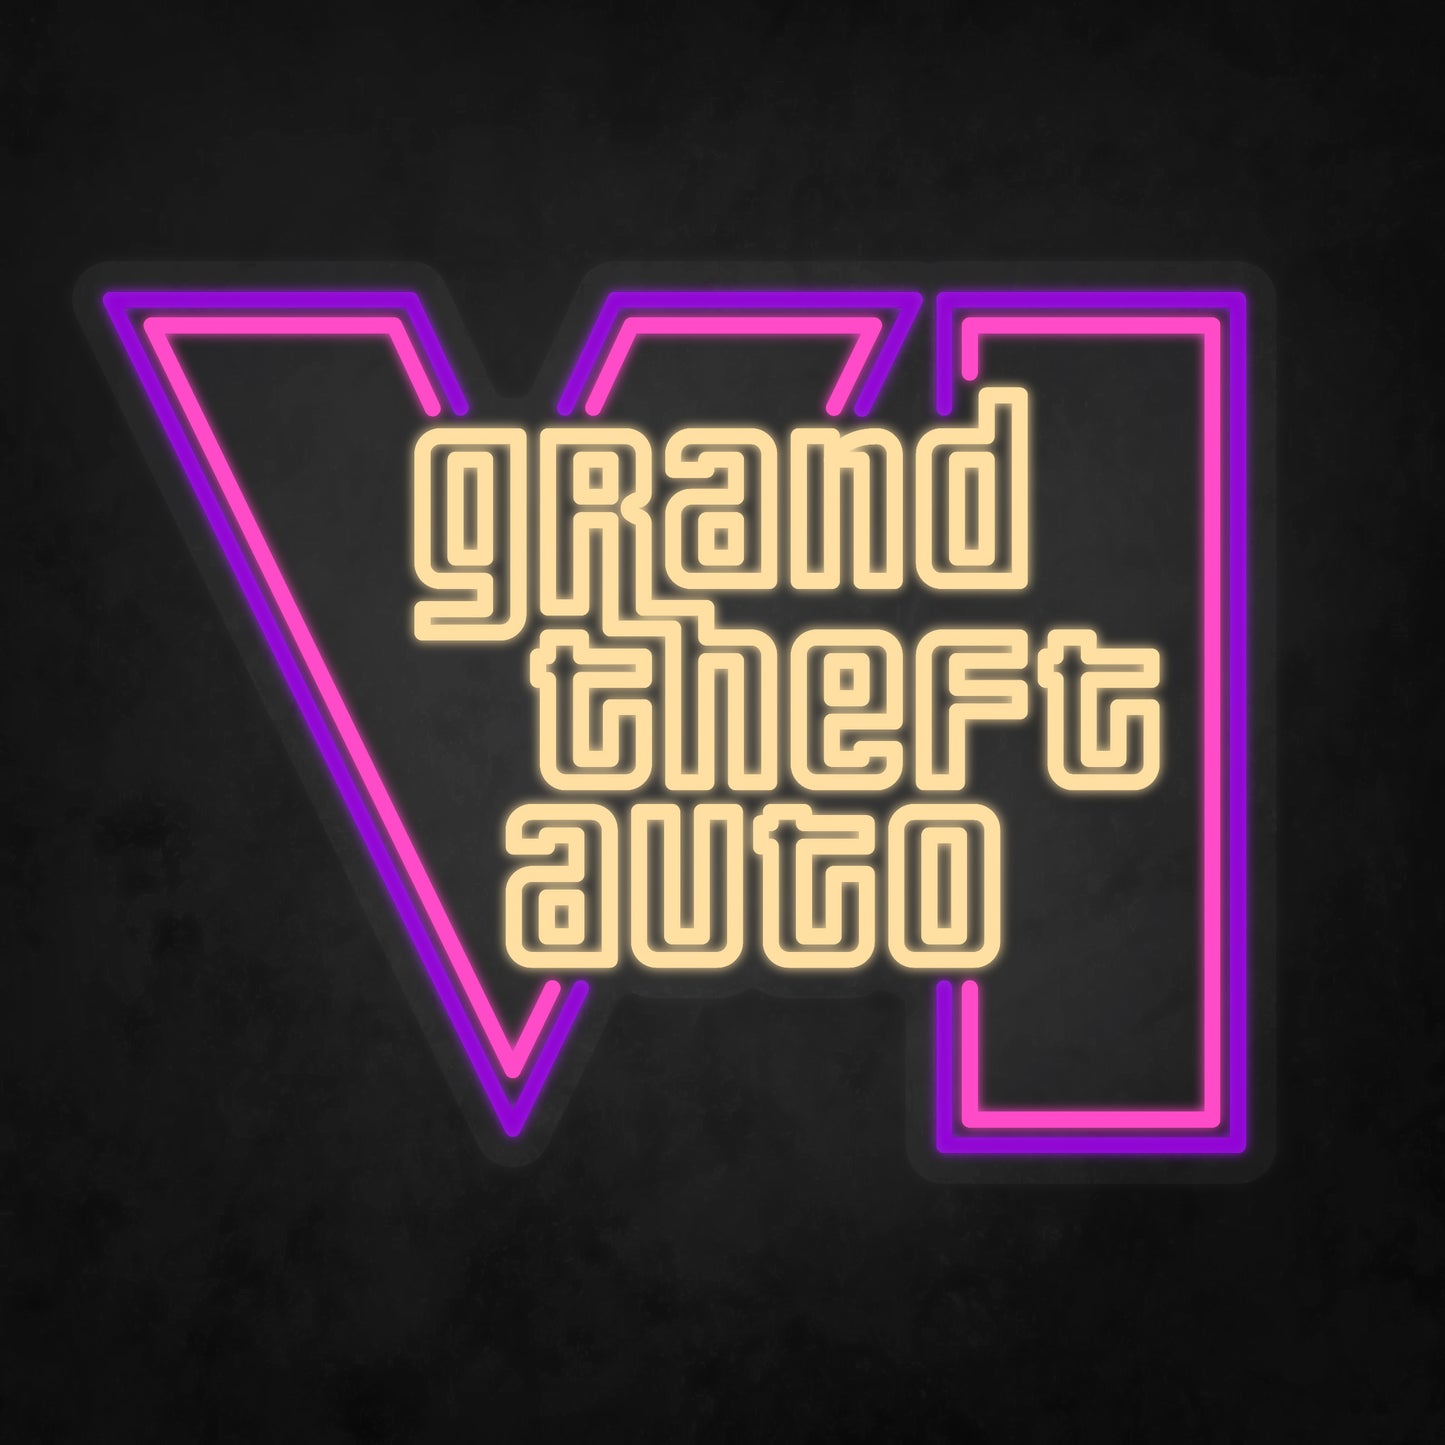 LED Neon Sign - Grand Theft Auto - GTA 6